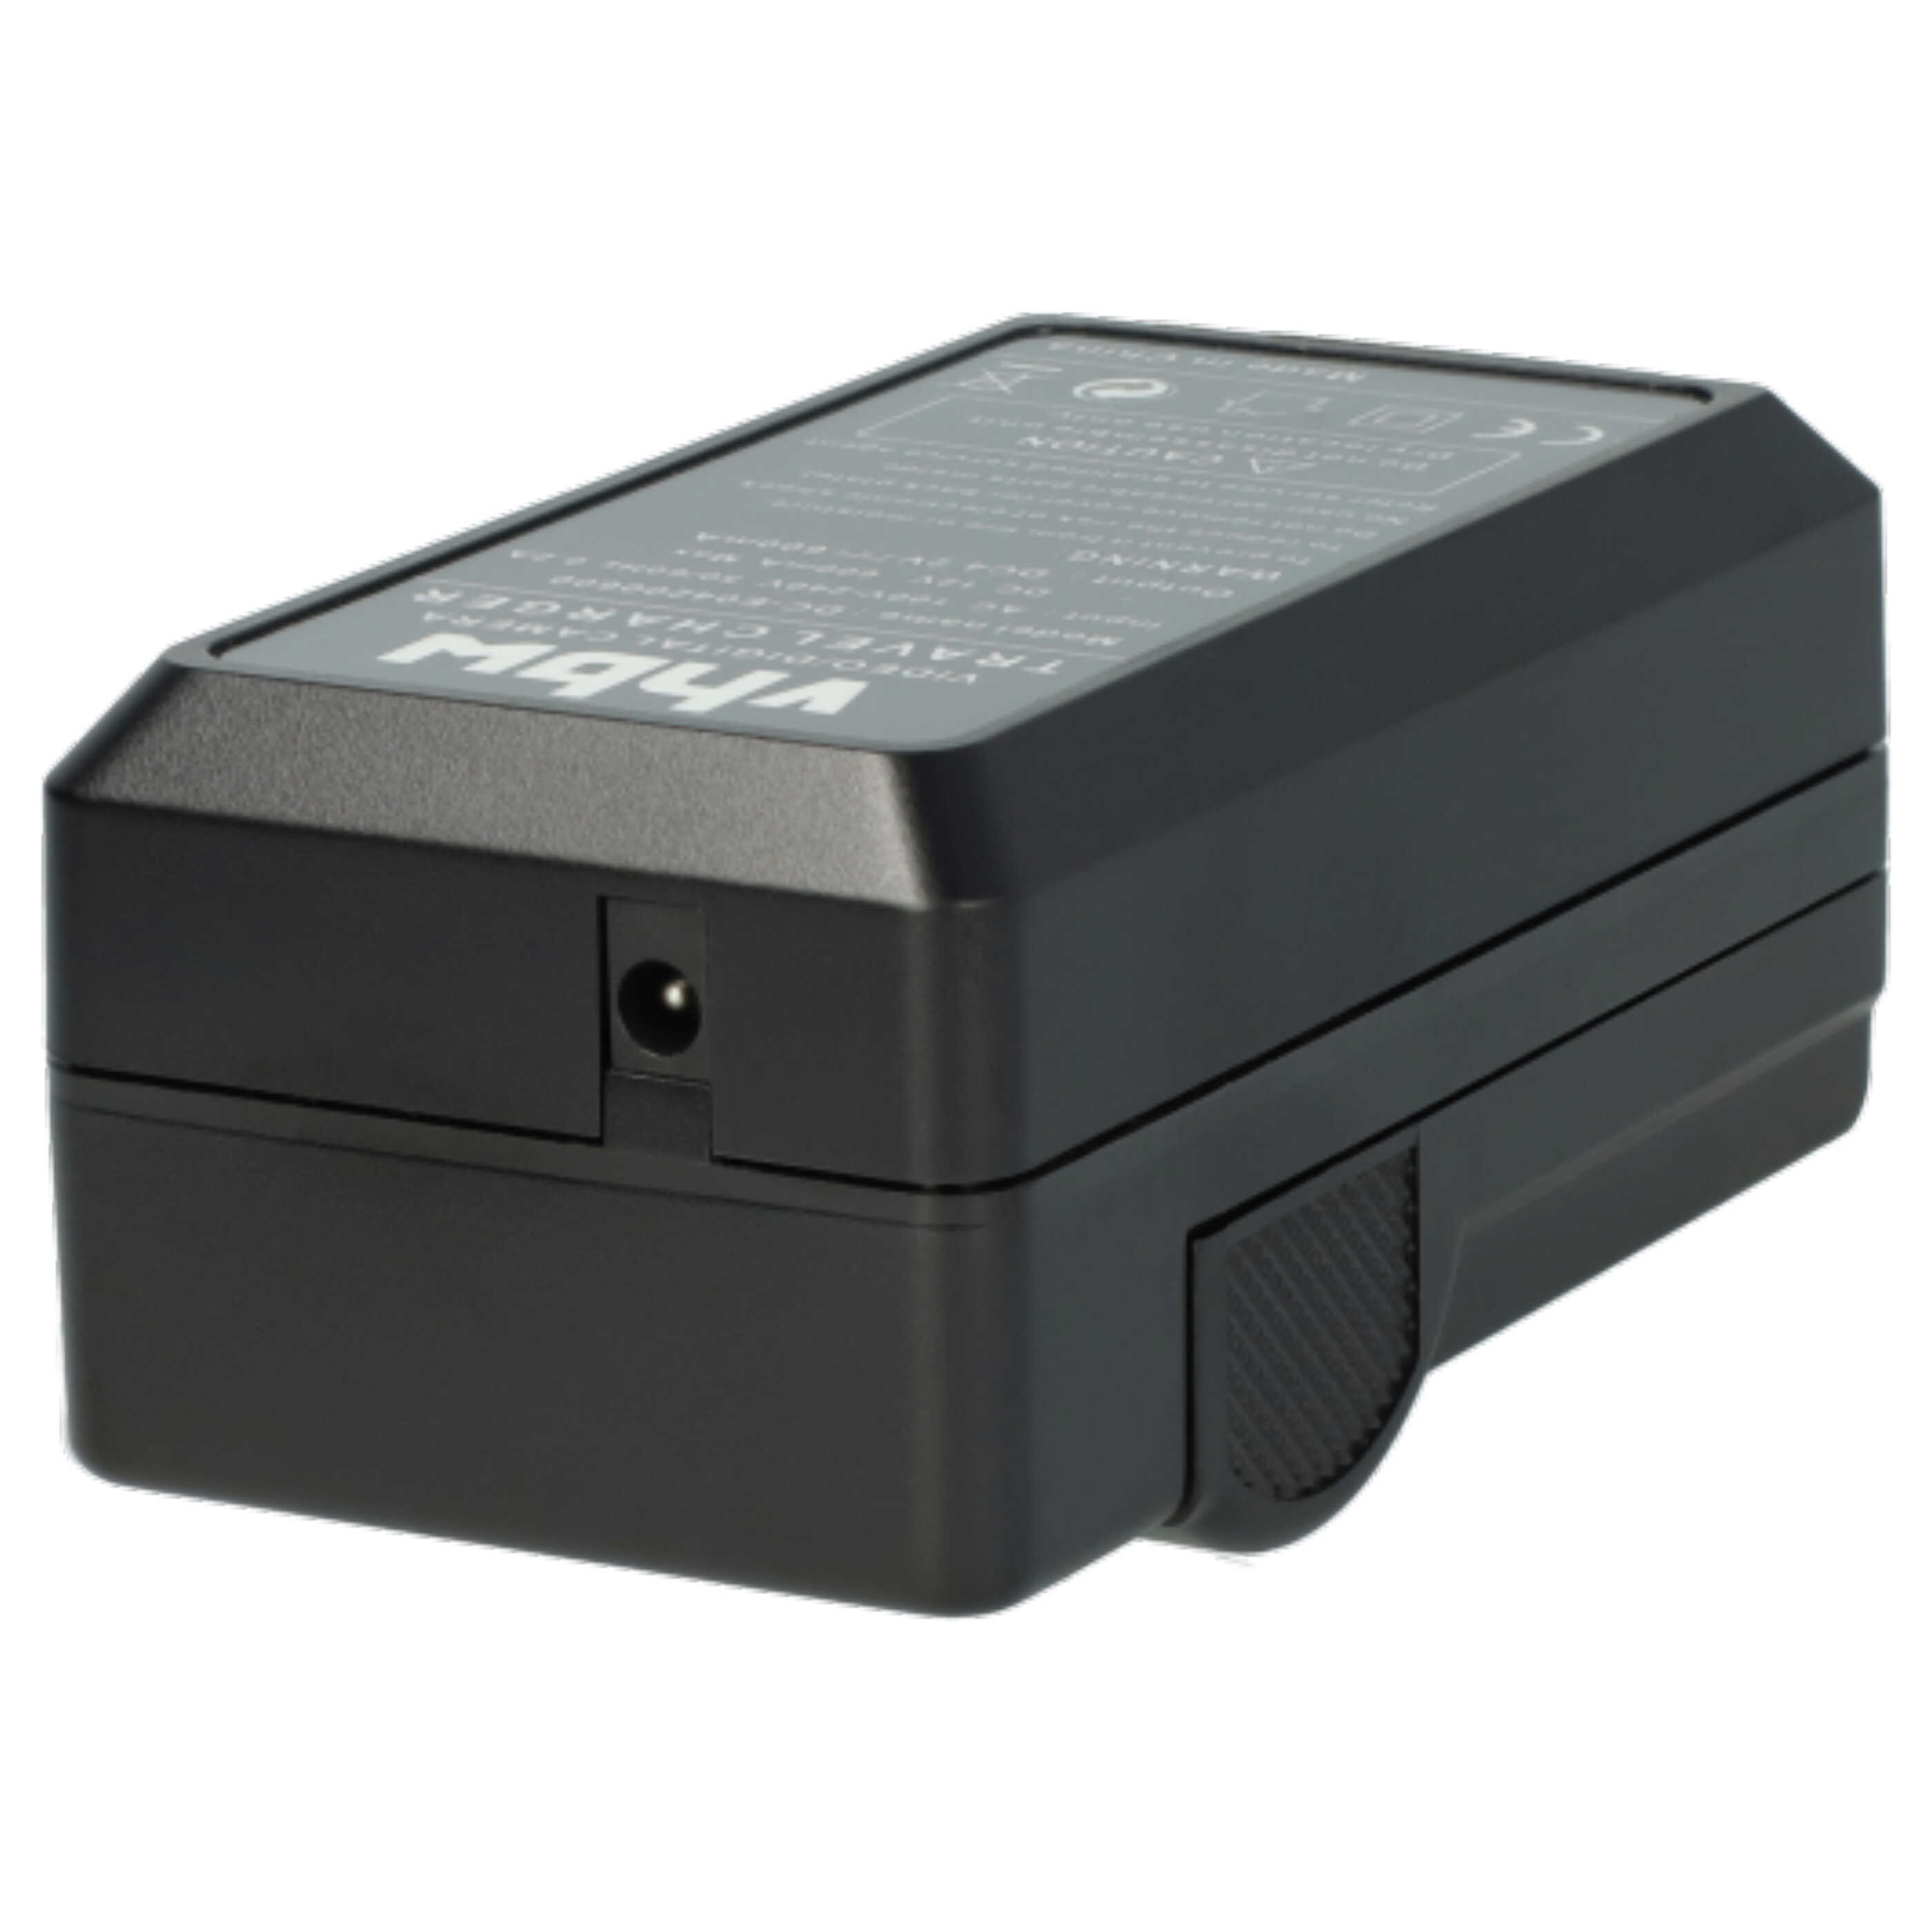 Akku Ladegerät passend für HX-WA2 Kamera u.a. - 0,6 A, 4,2 V